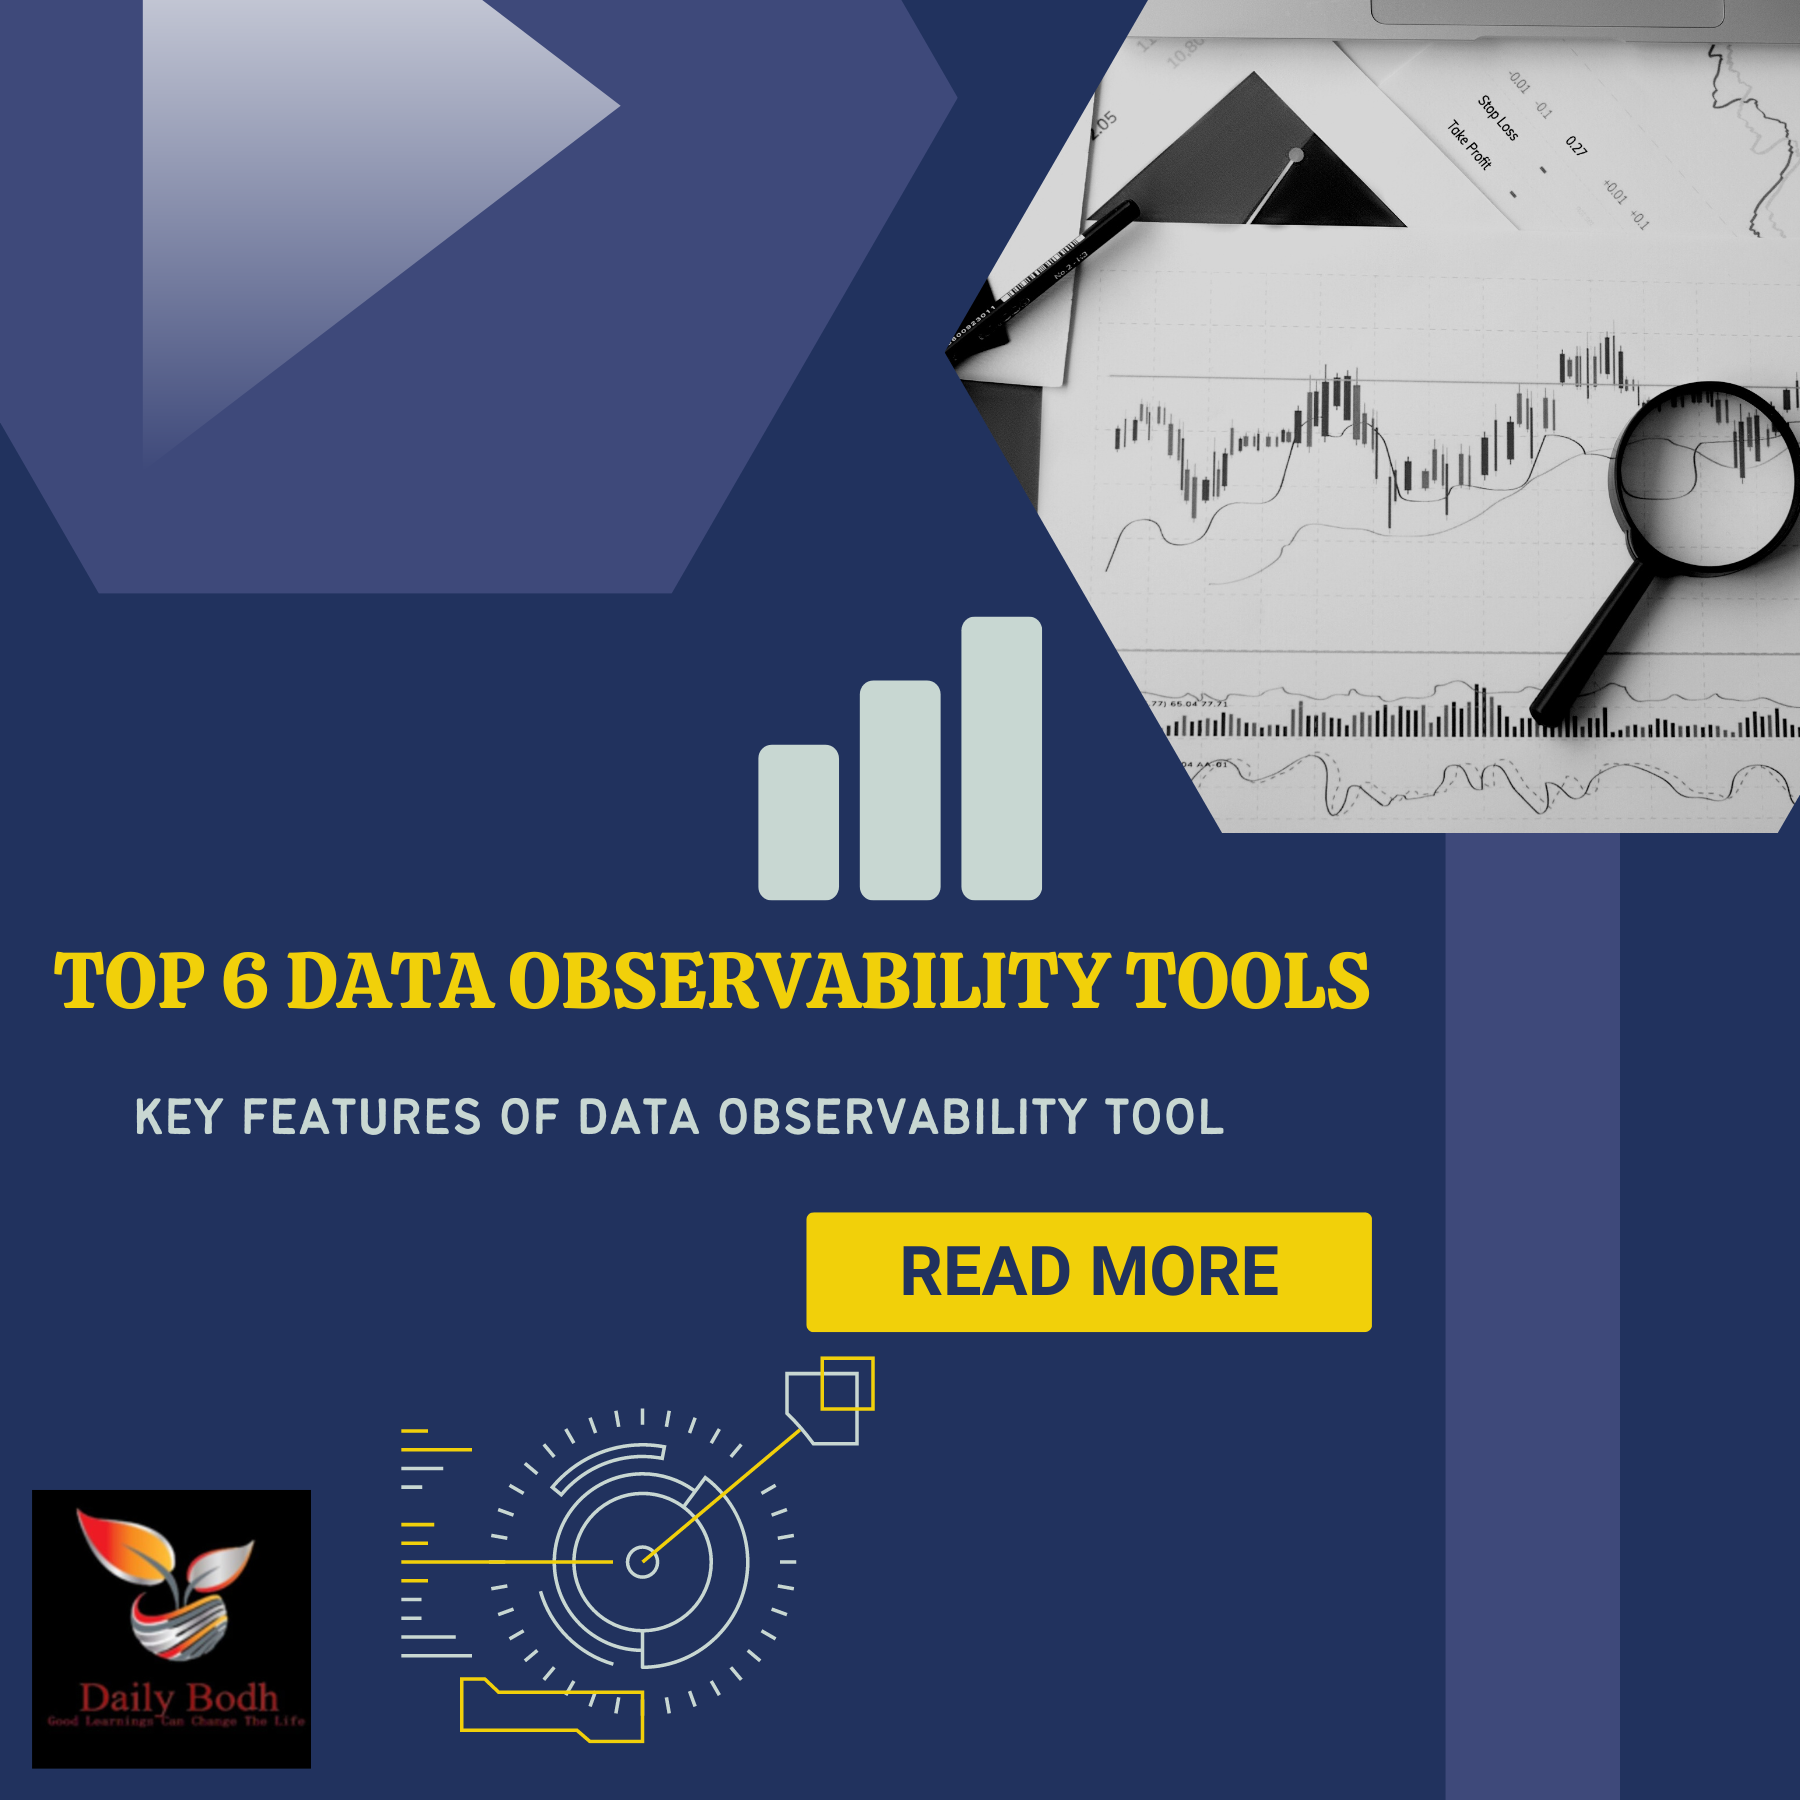 Data Observability